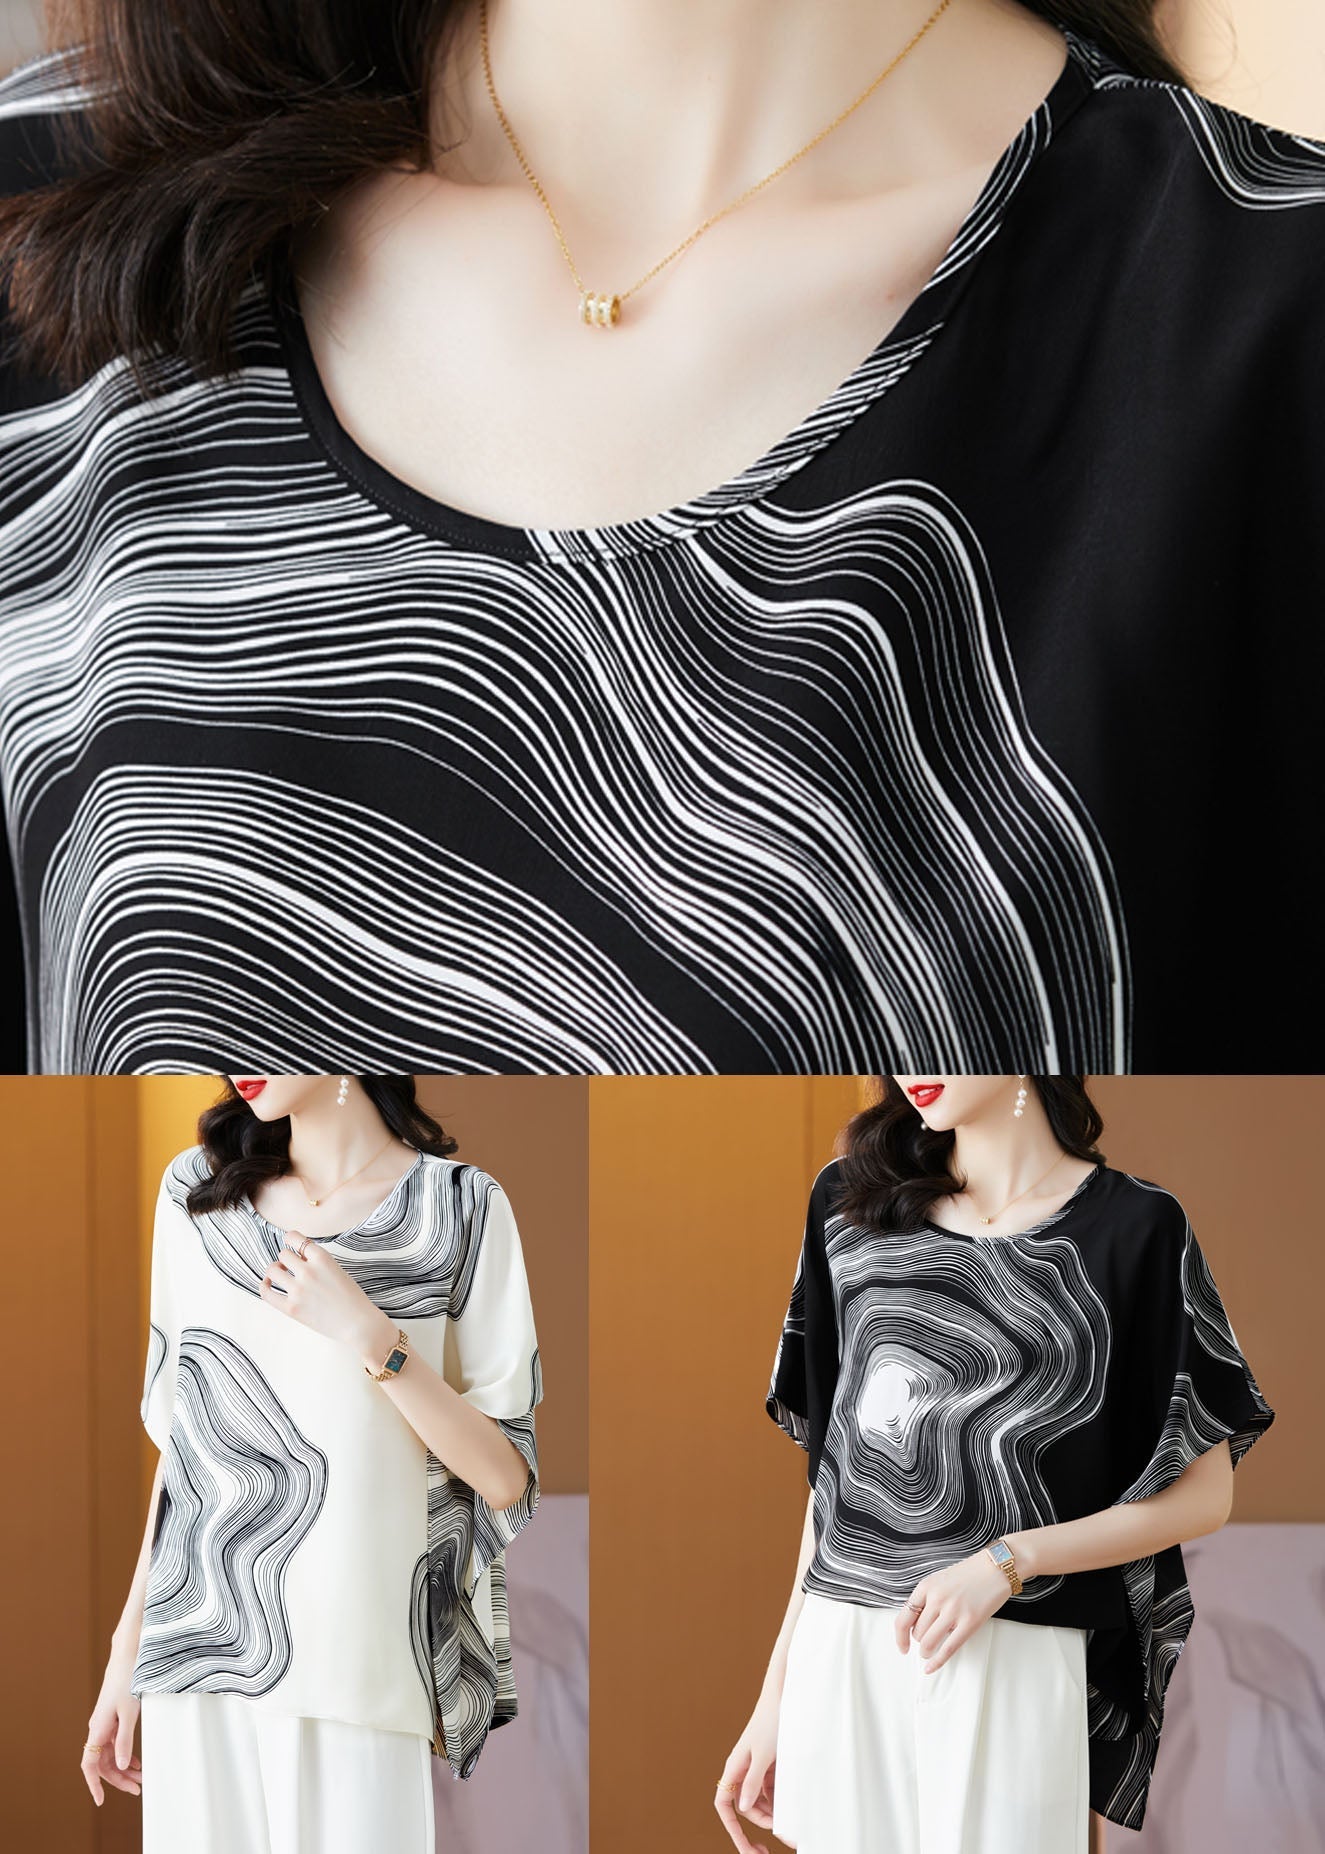 Black Patchwork Print Silk Blouse Tops O Neck Summer LY0482 - fabuloryshop